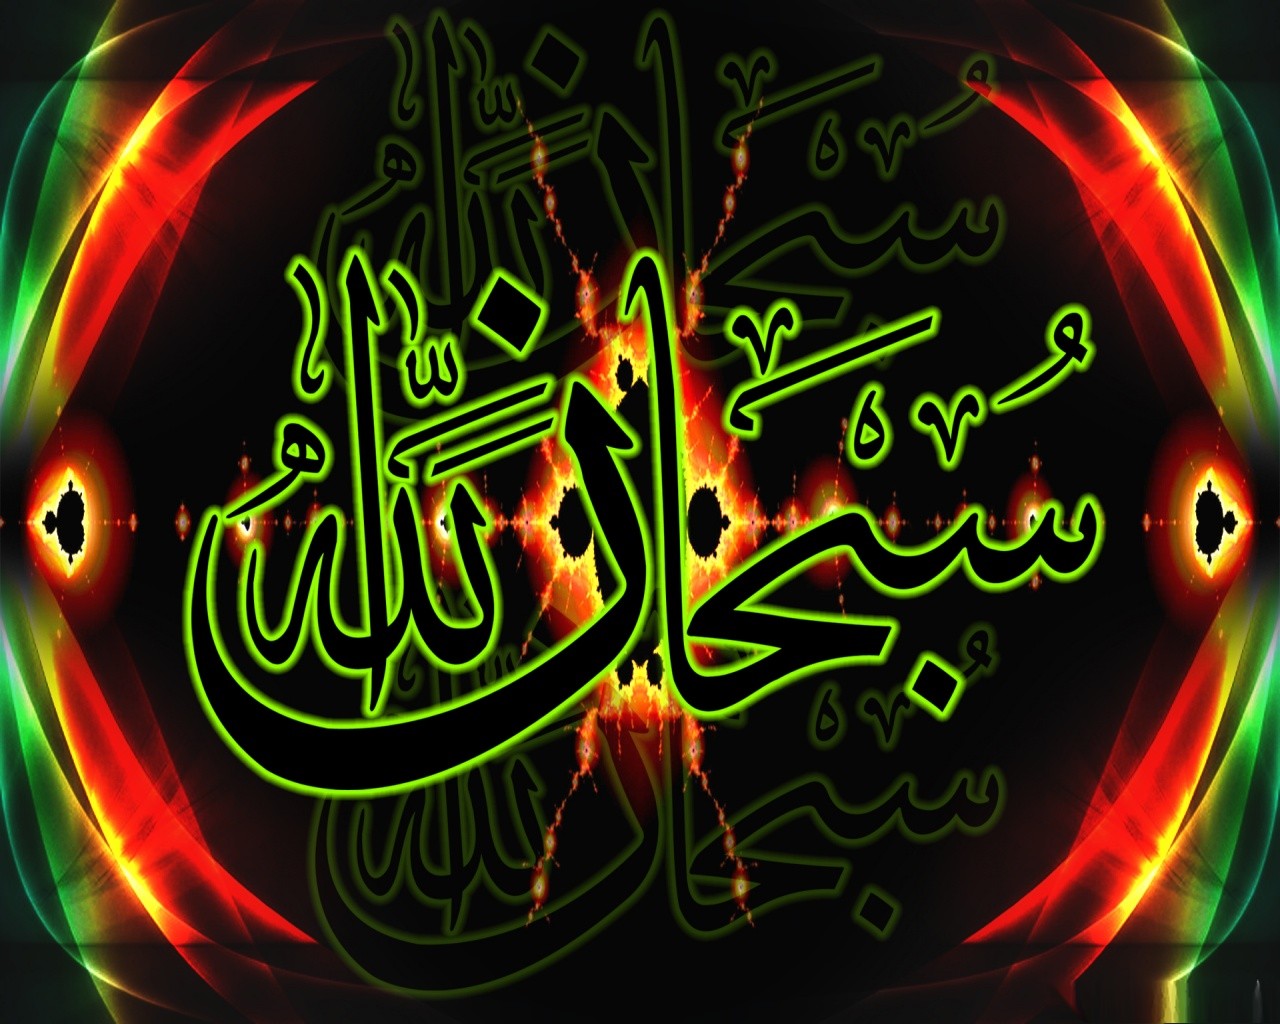 Allah Muhammad Wallpaper HD - WallpaperSafari